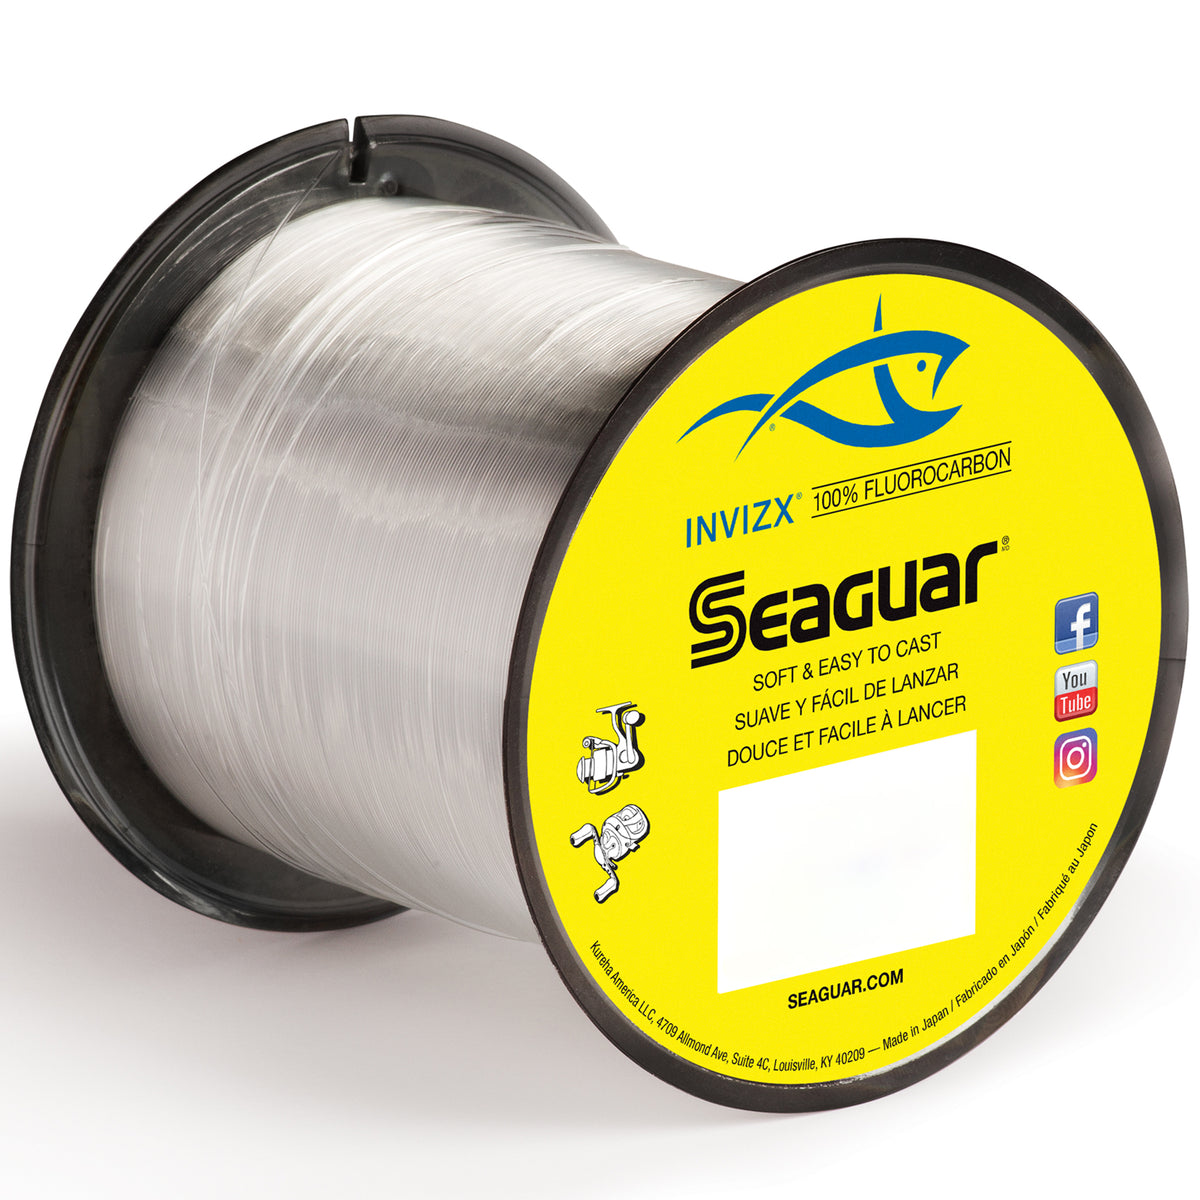 Seaguar Invizx 100% Fluorocarbon 200 Yard Fishing Line (20-Pound